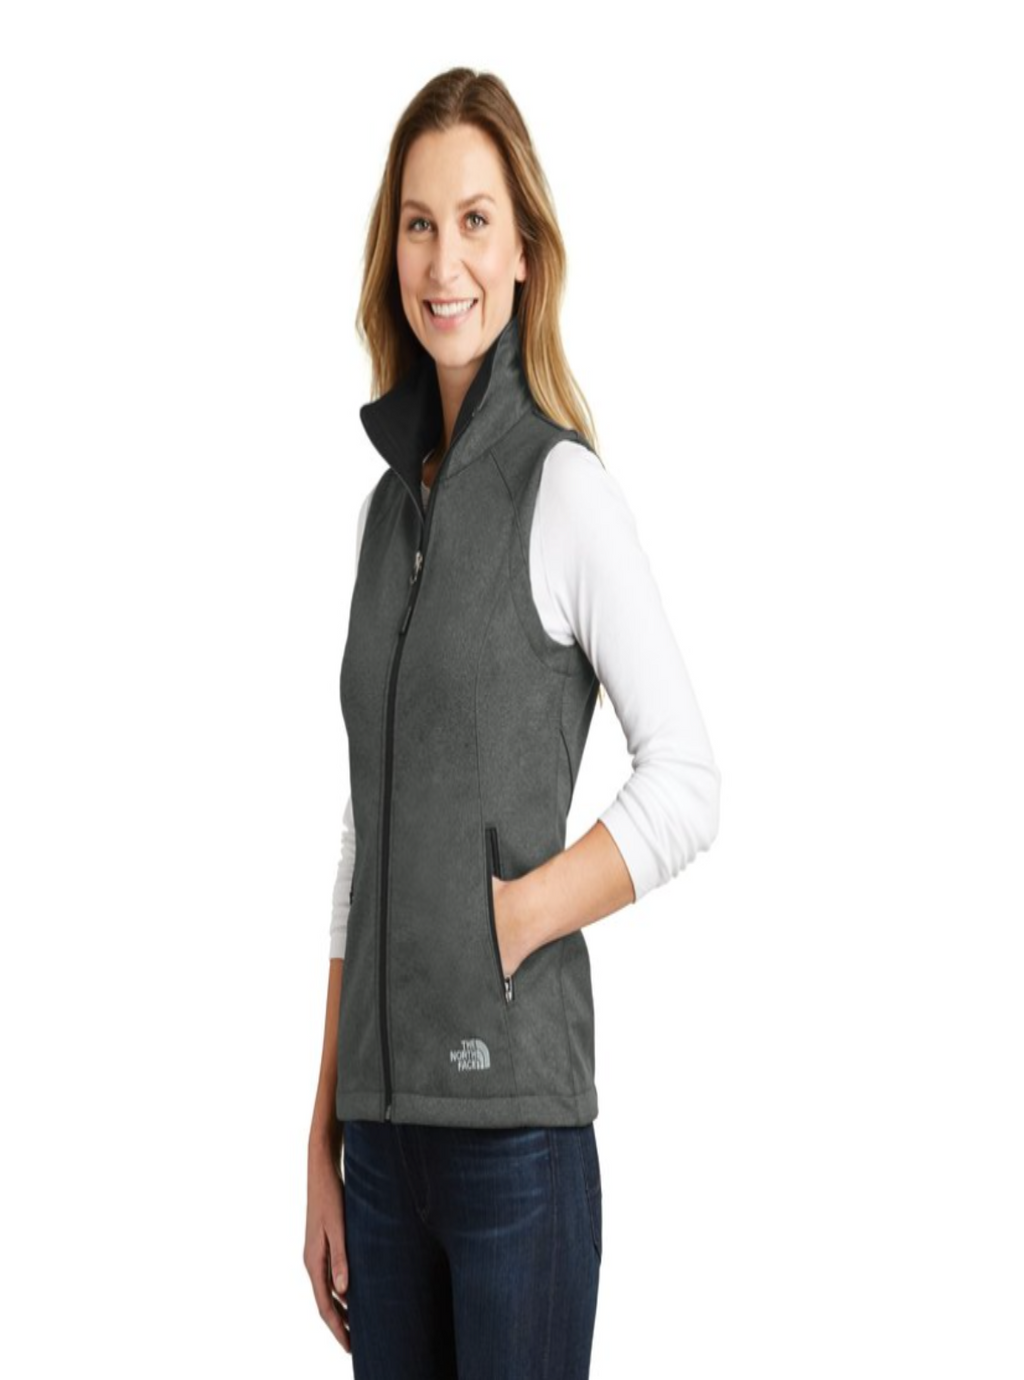 The North Face® Ladies Ridgeline Soft Shell Vest